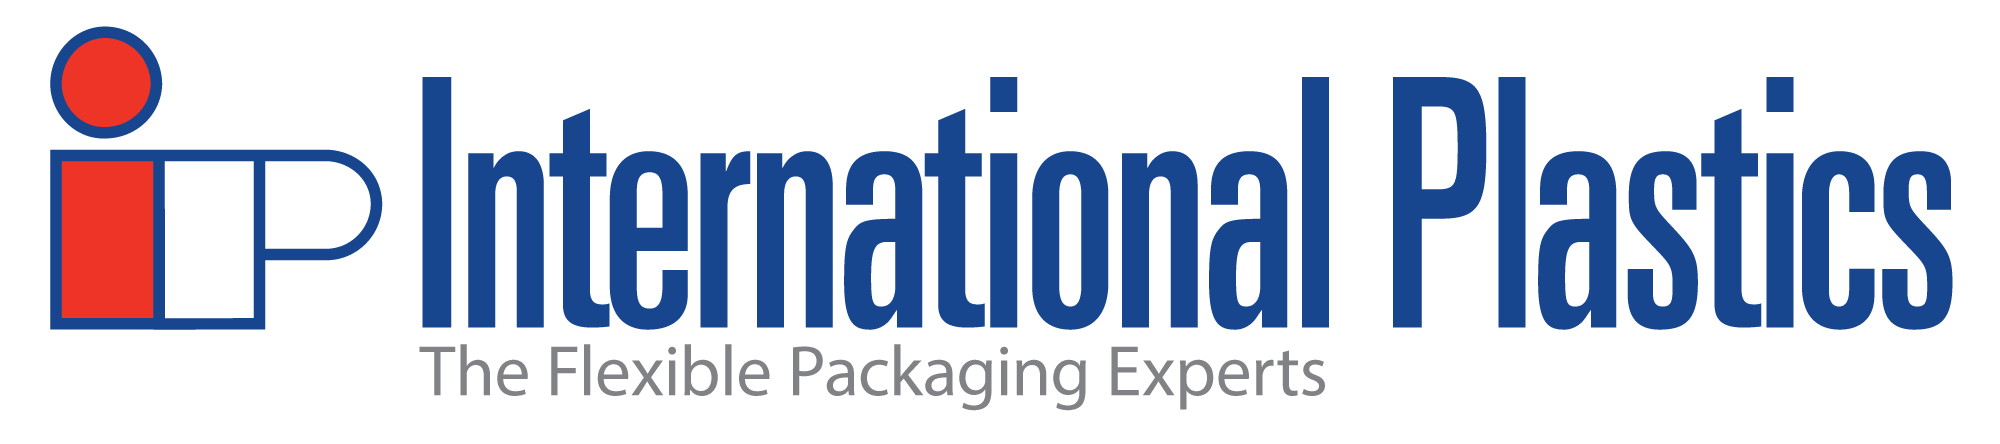 International Plastics logo